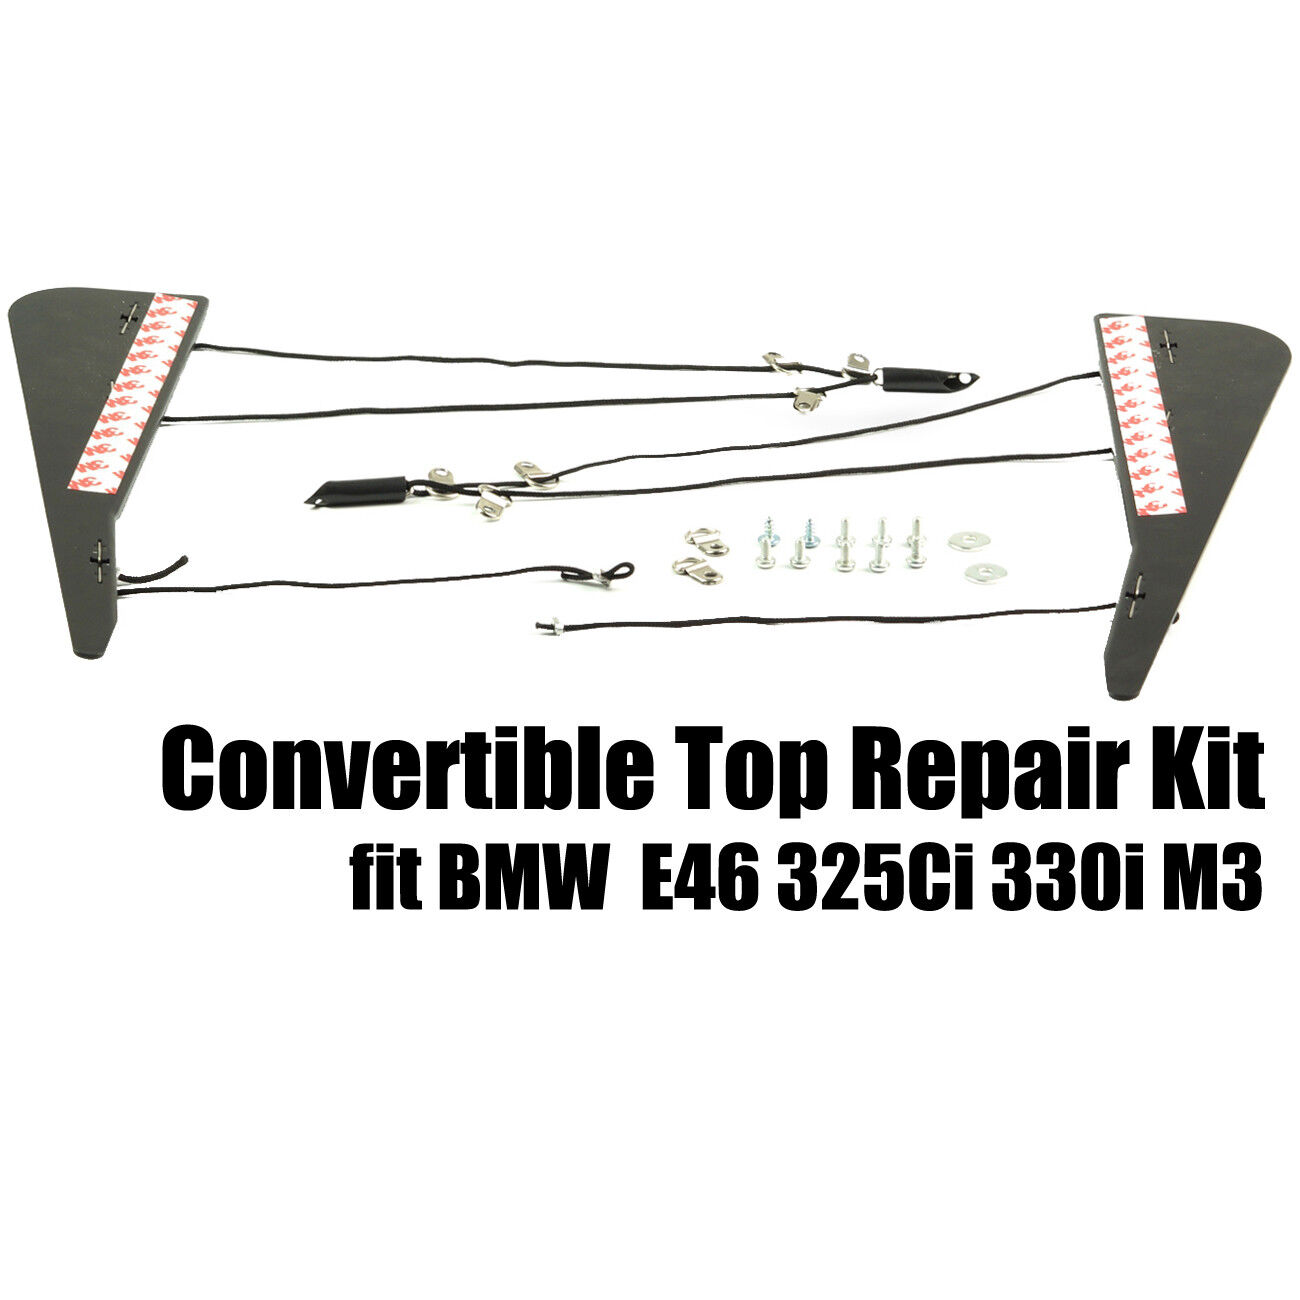 Repair Kit Convertible Top  “C” Column For BMW E46 325Ci 330Ci M3 54317135351